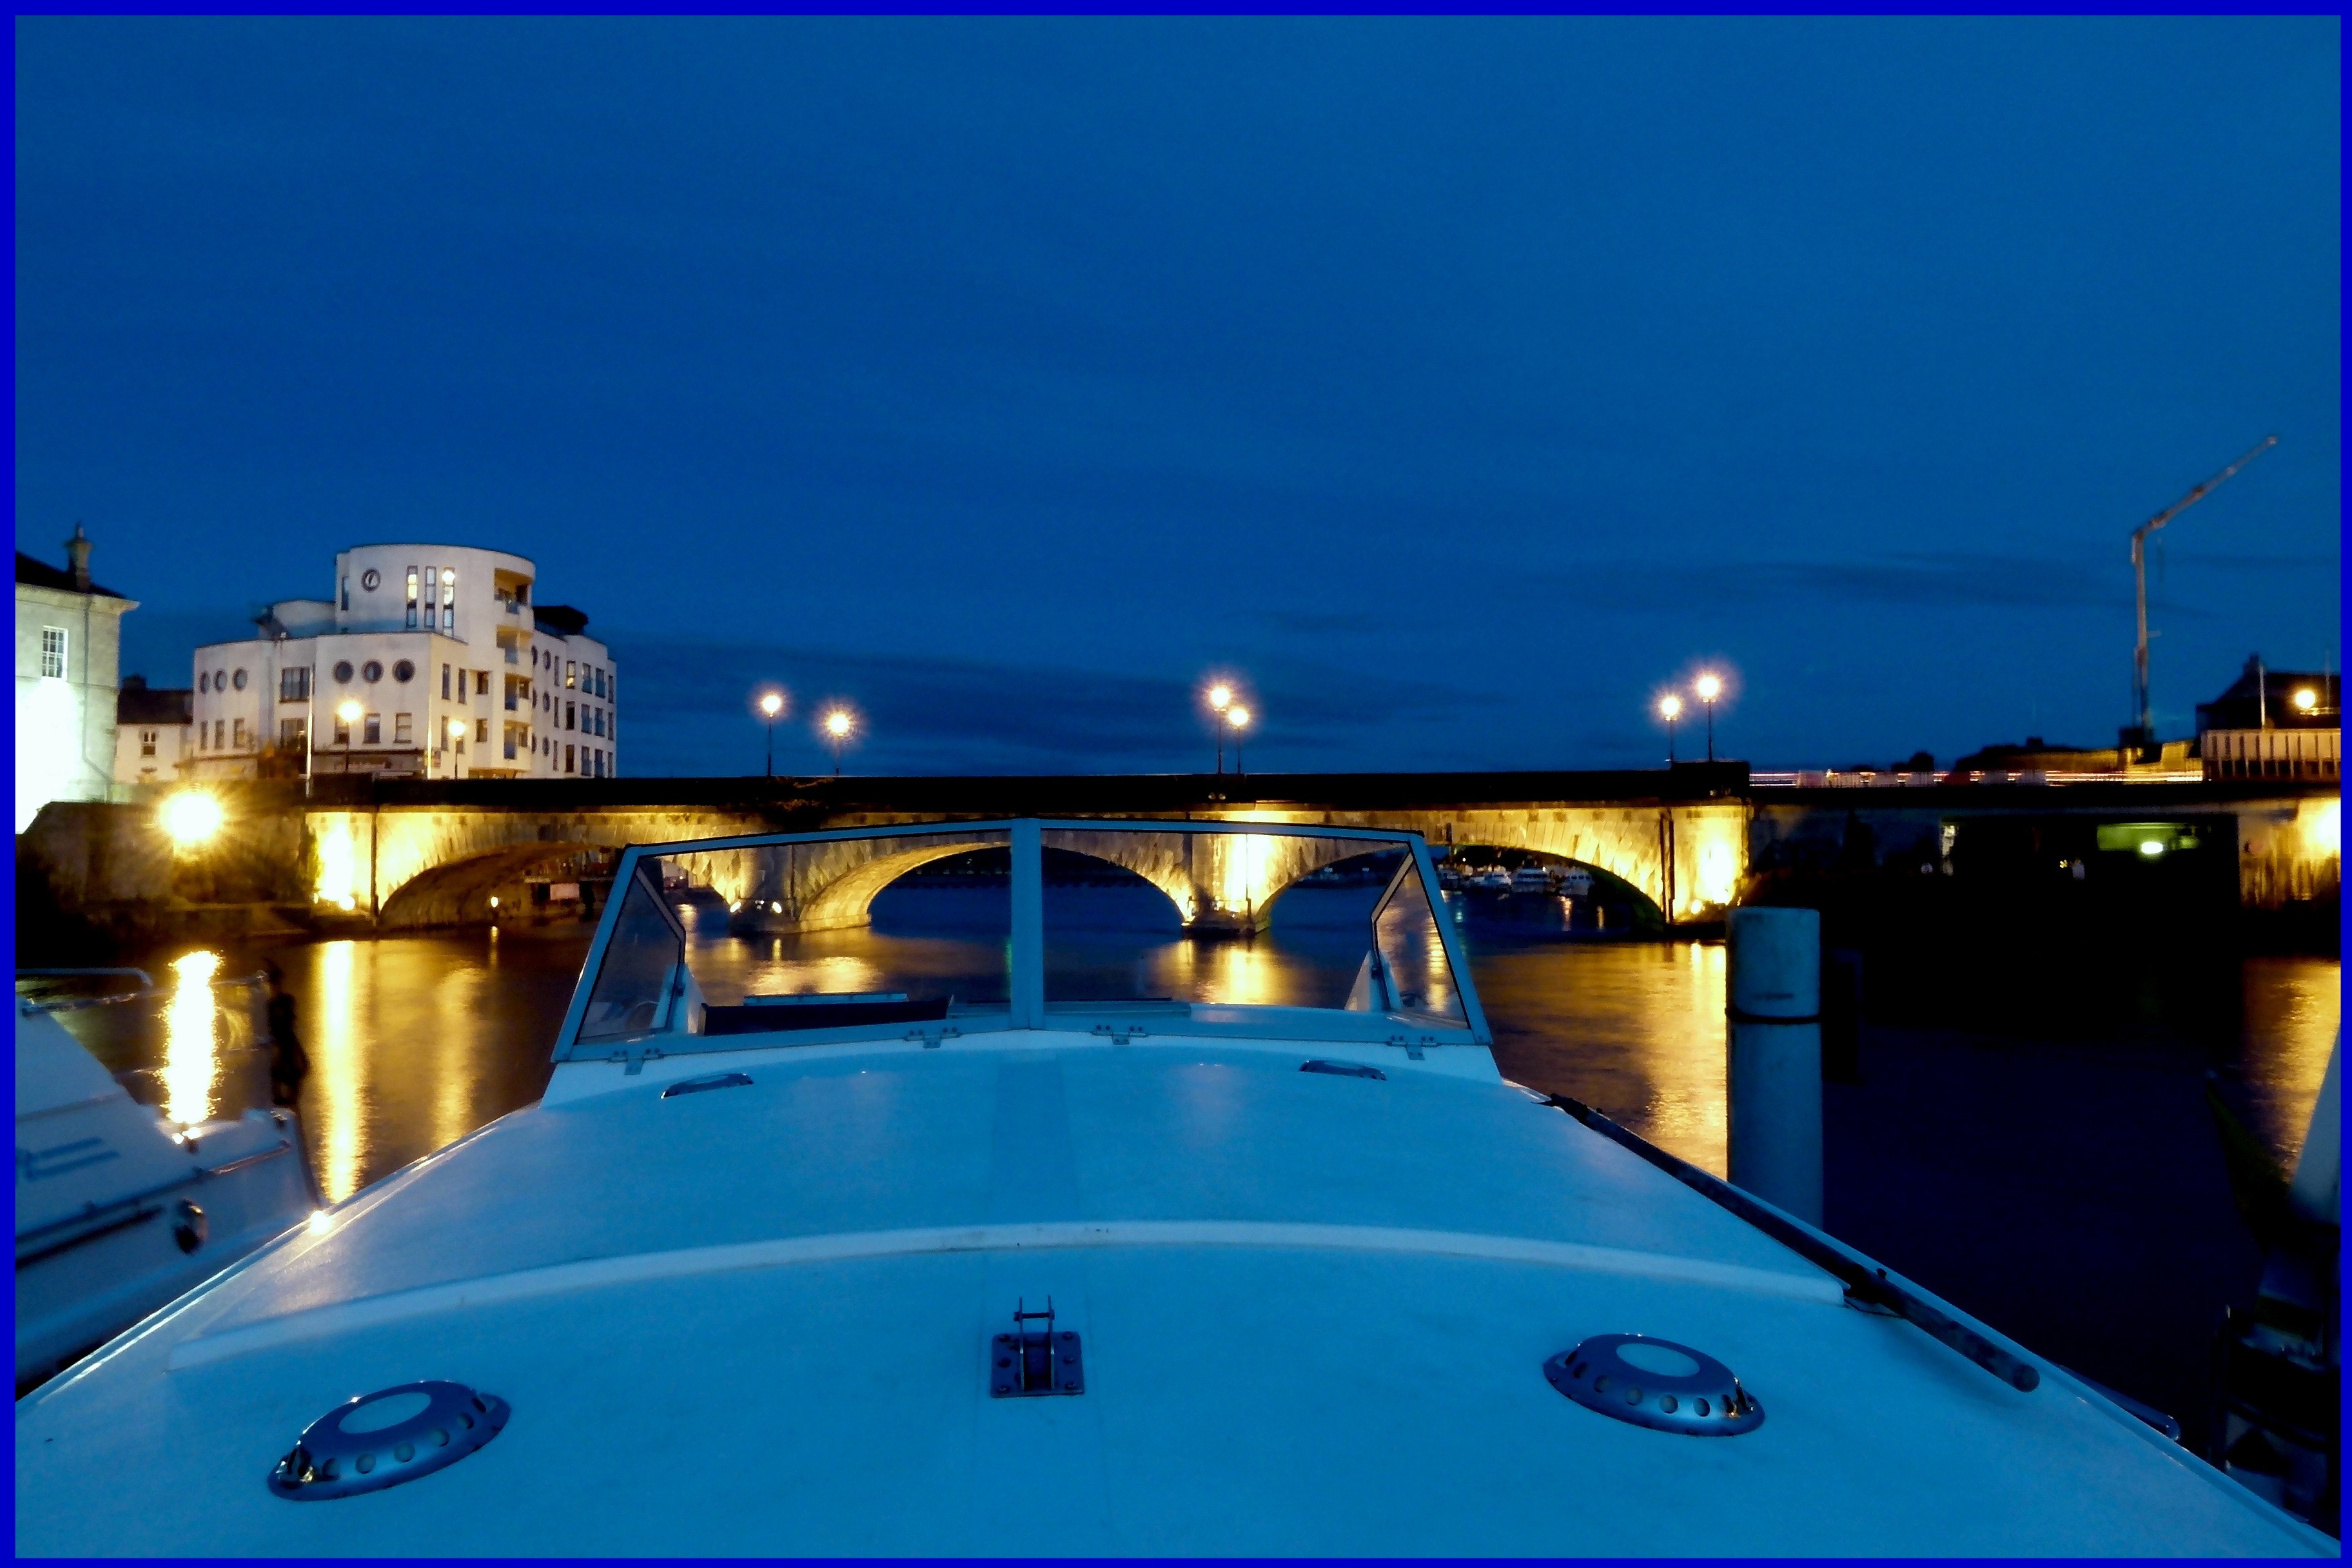 Athlone, Bridge, Ireland, Boot, Shannon, illuminated, night